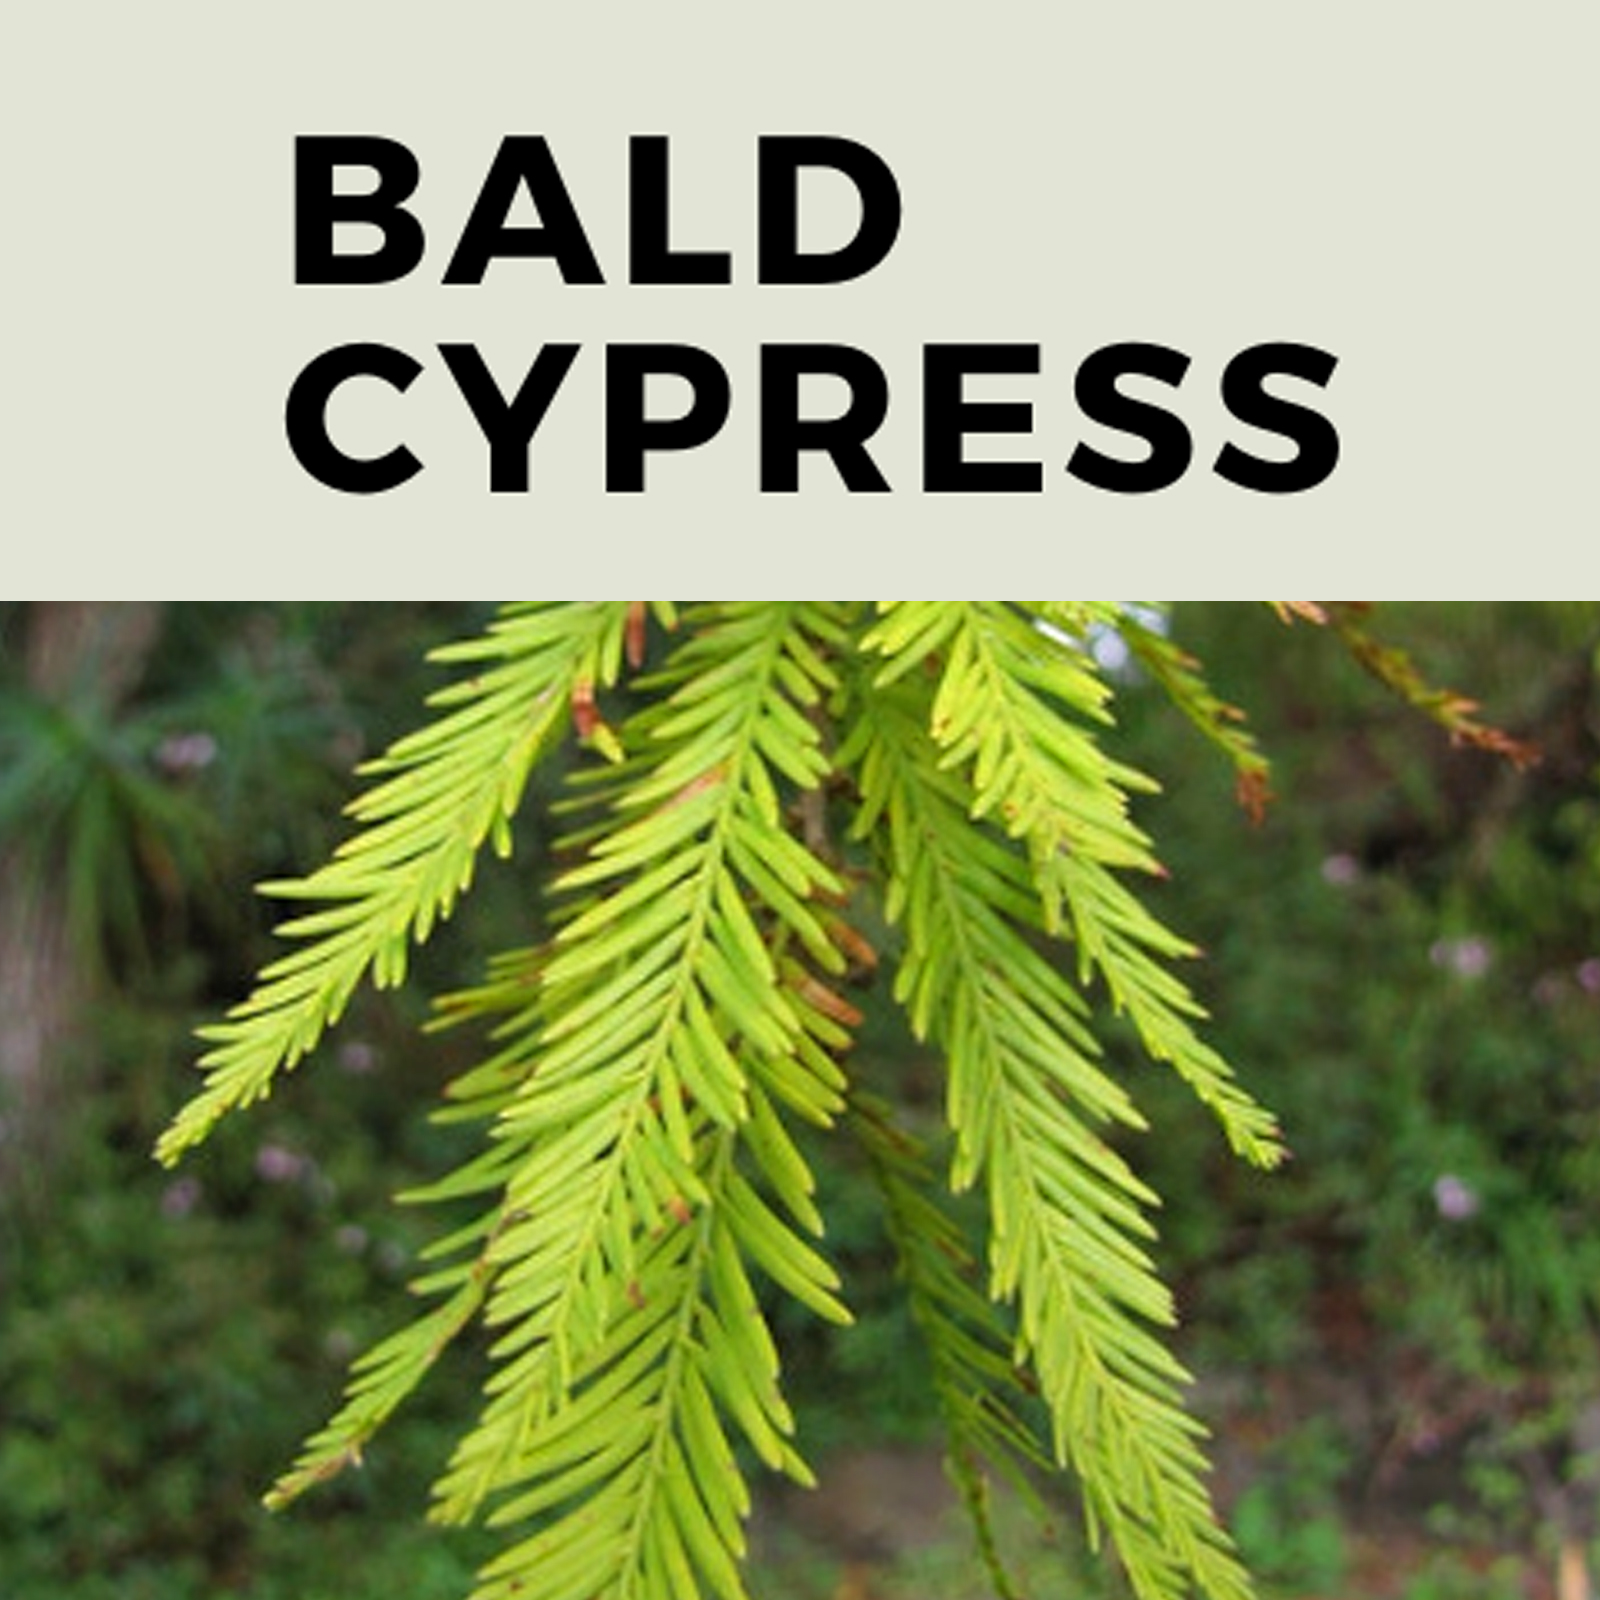 bald cypress